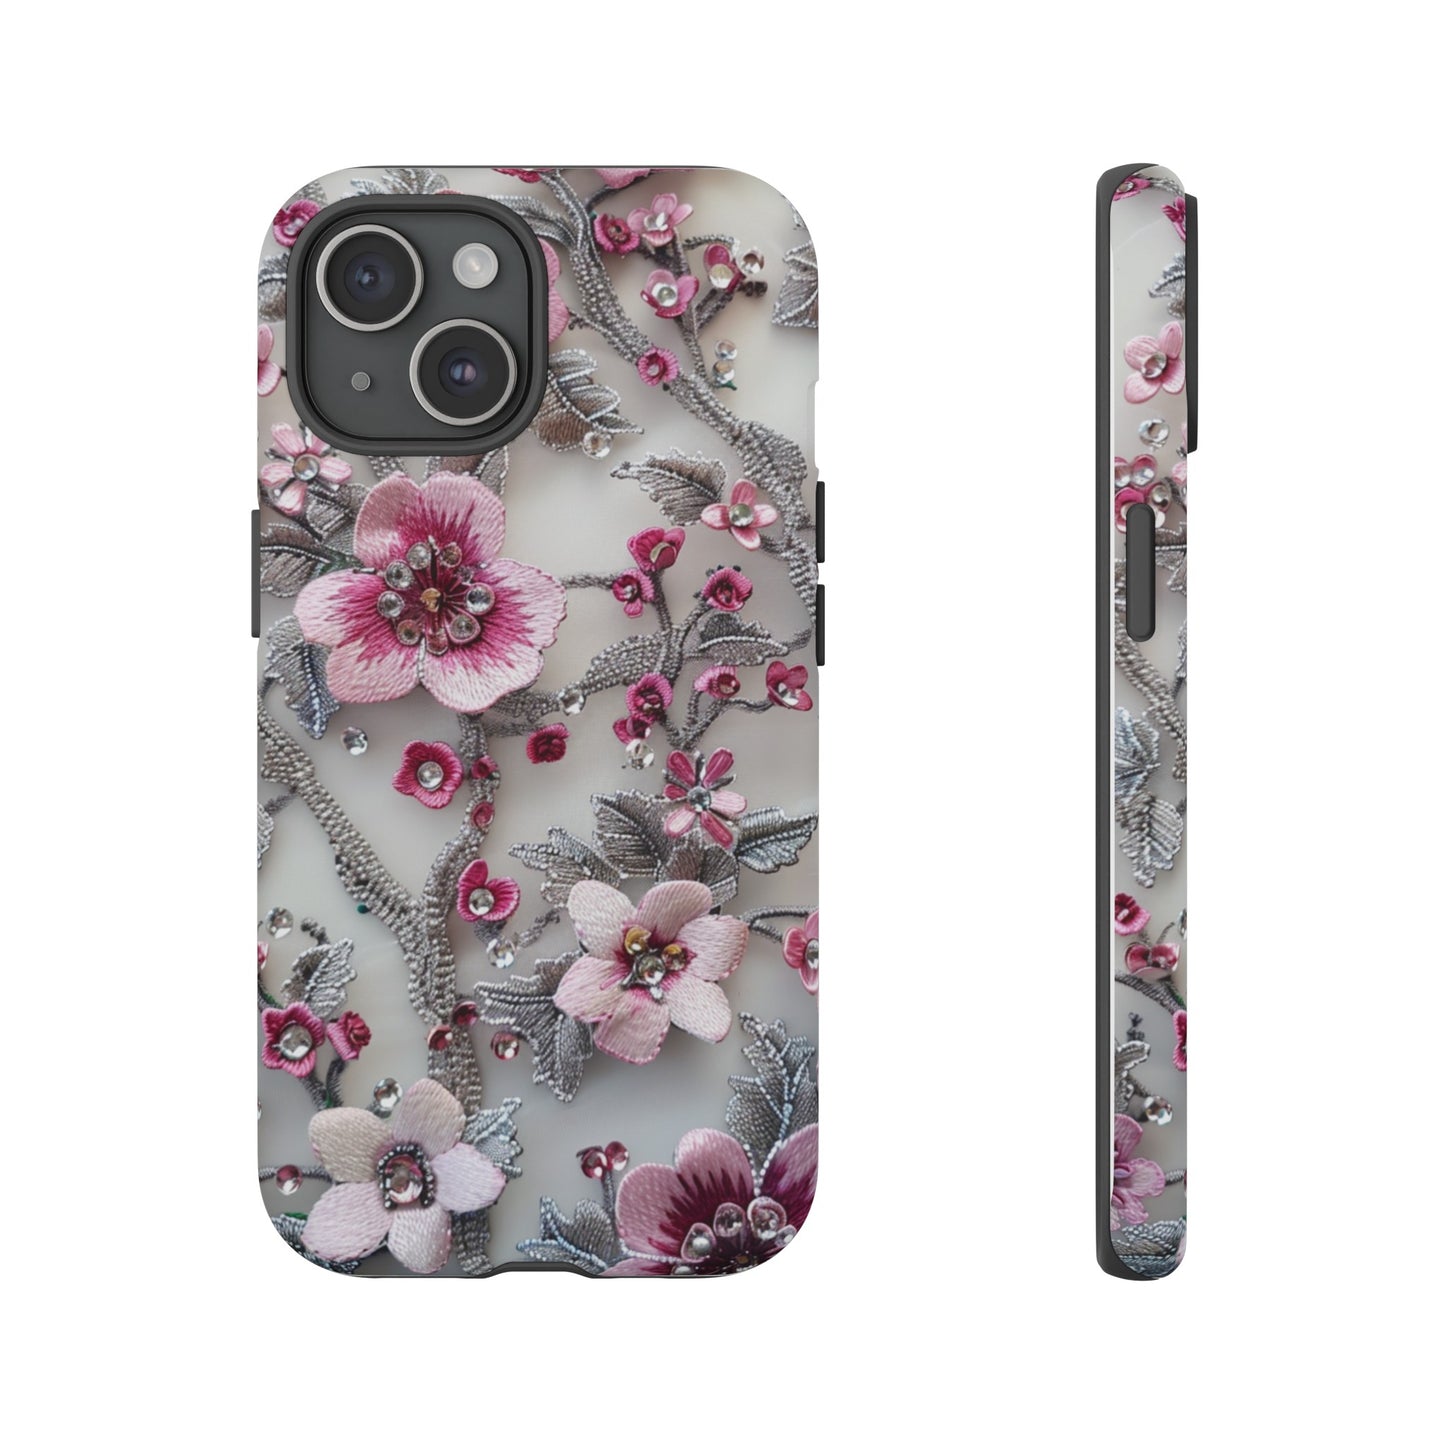 Coquette Aesthetic Floral Art iPhone 12 Case